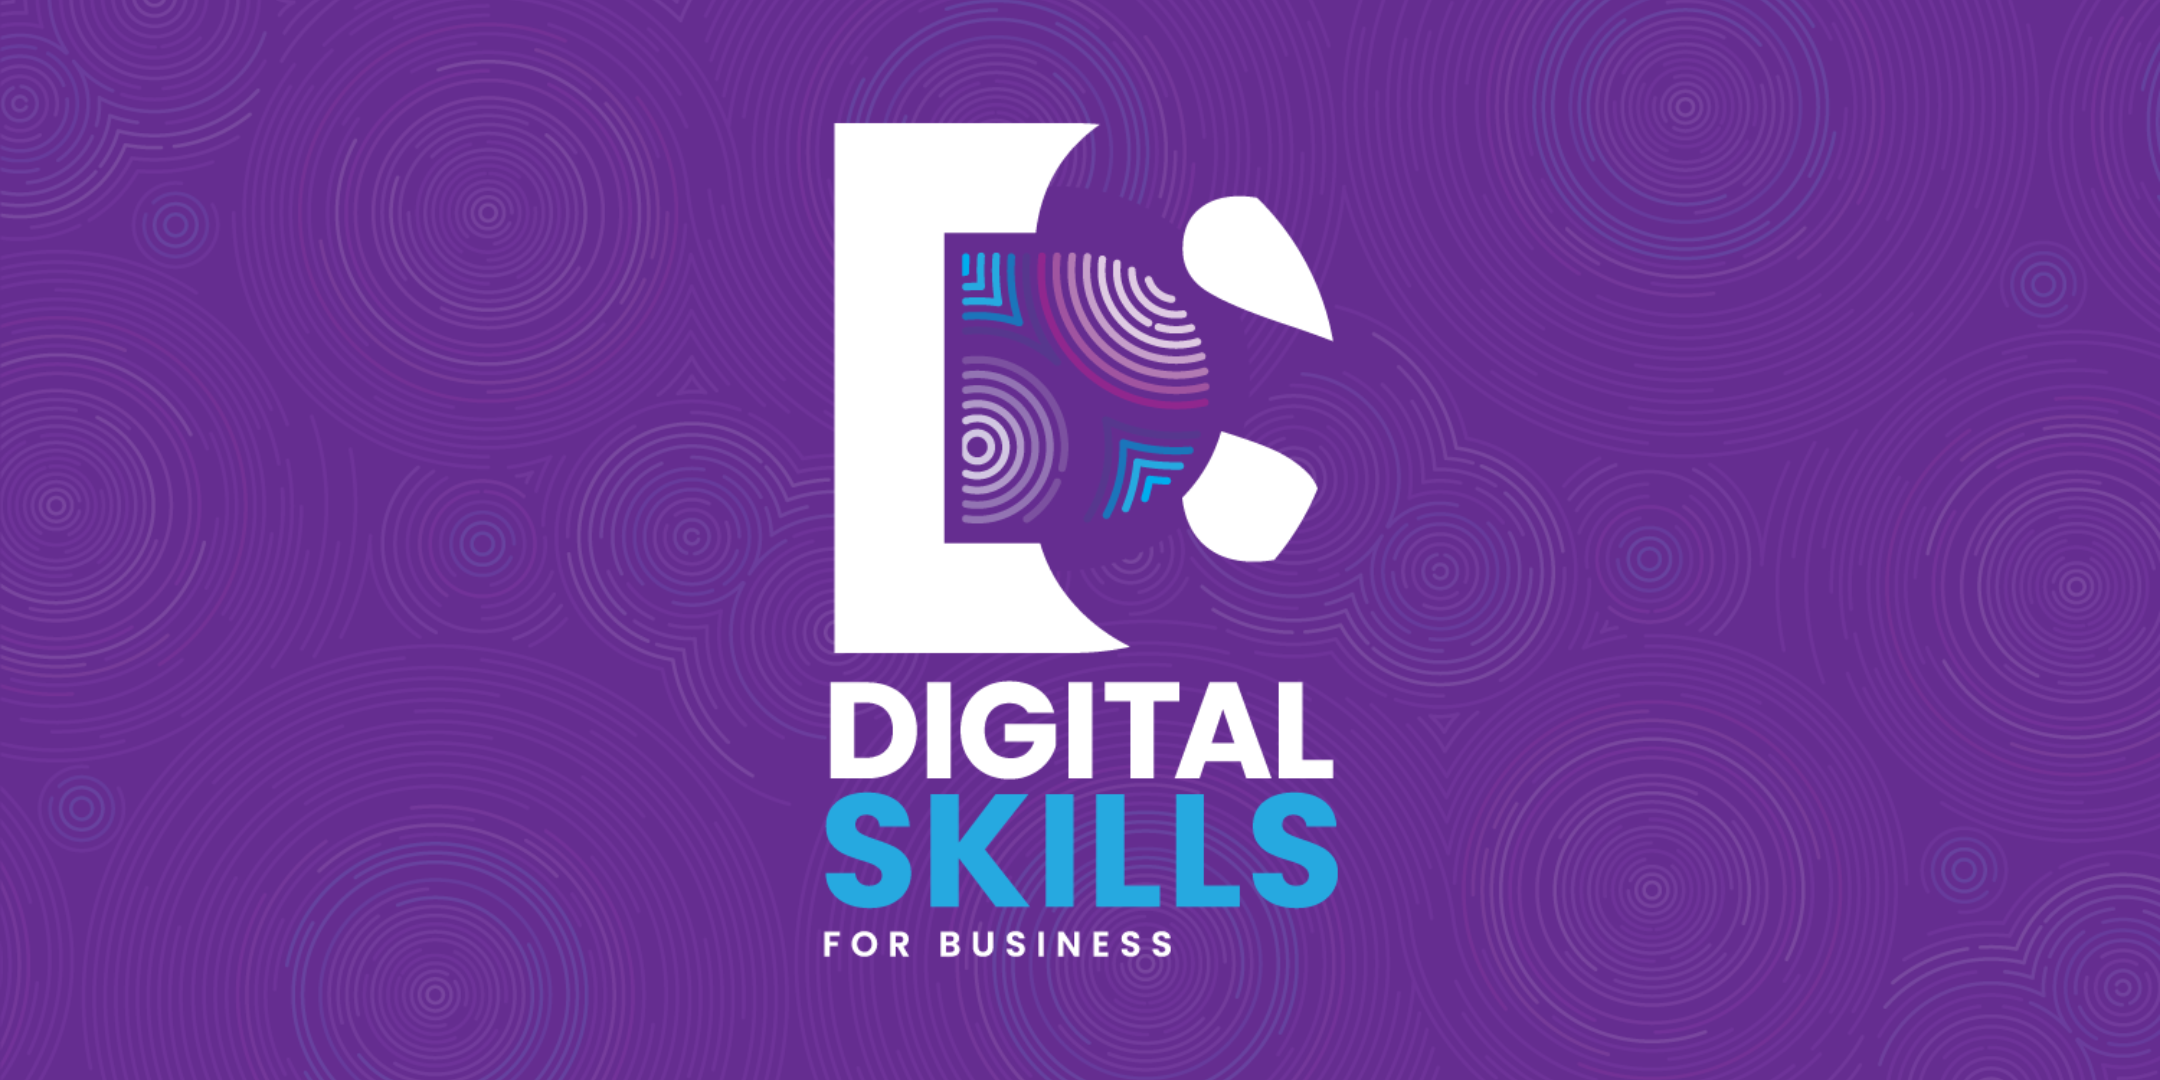 Digital Skills for Business: Web Presence 101 - Ensuring Your